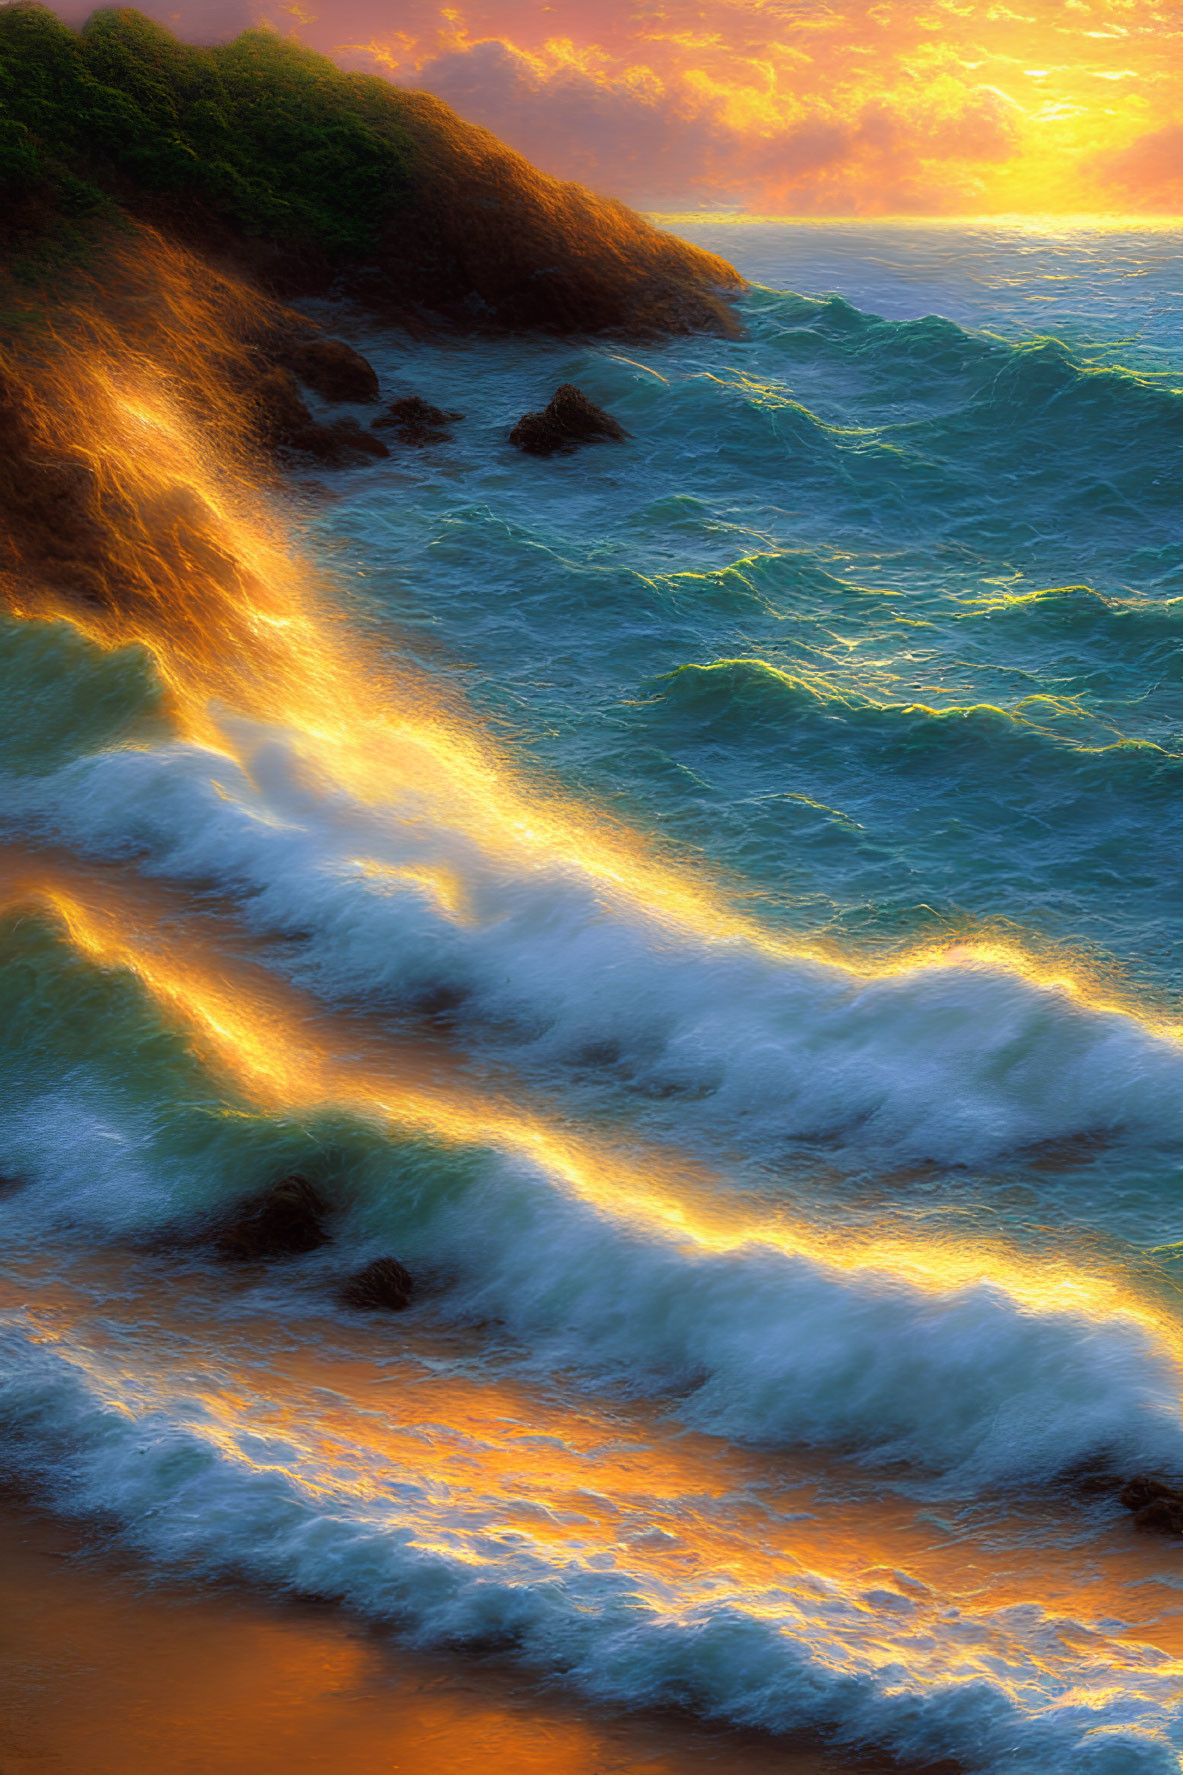 Scenic golden sunset over rugged coastline with crashing waves